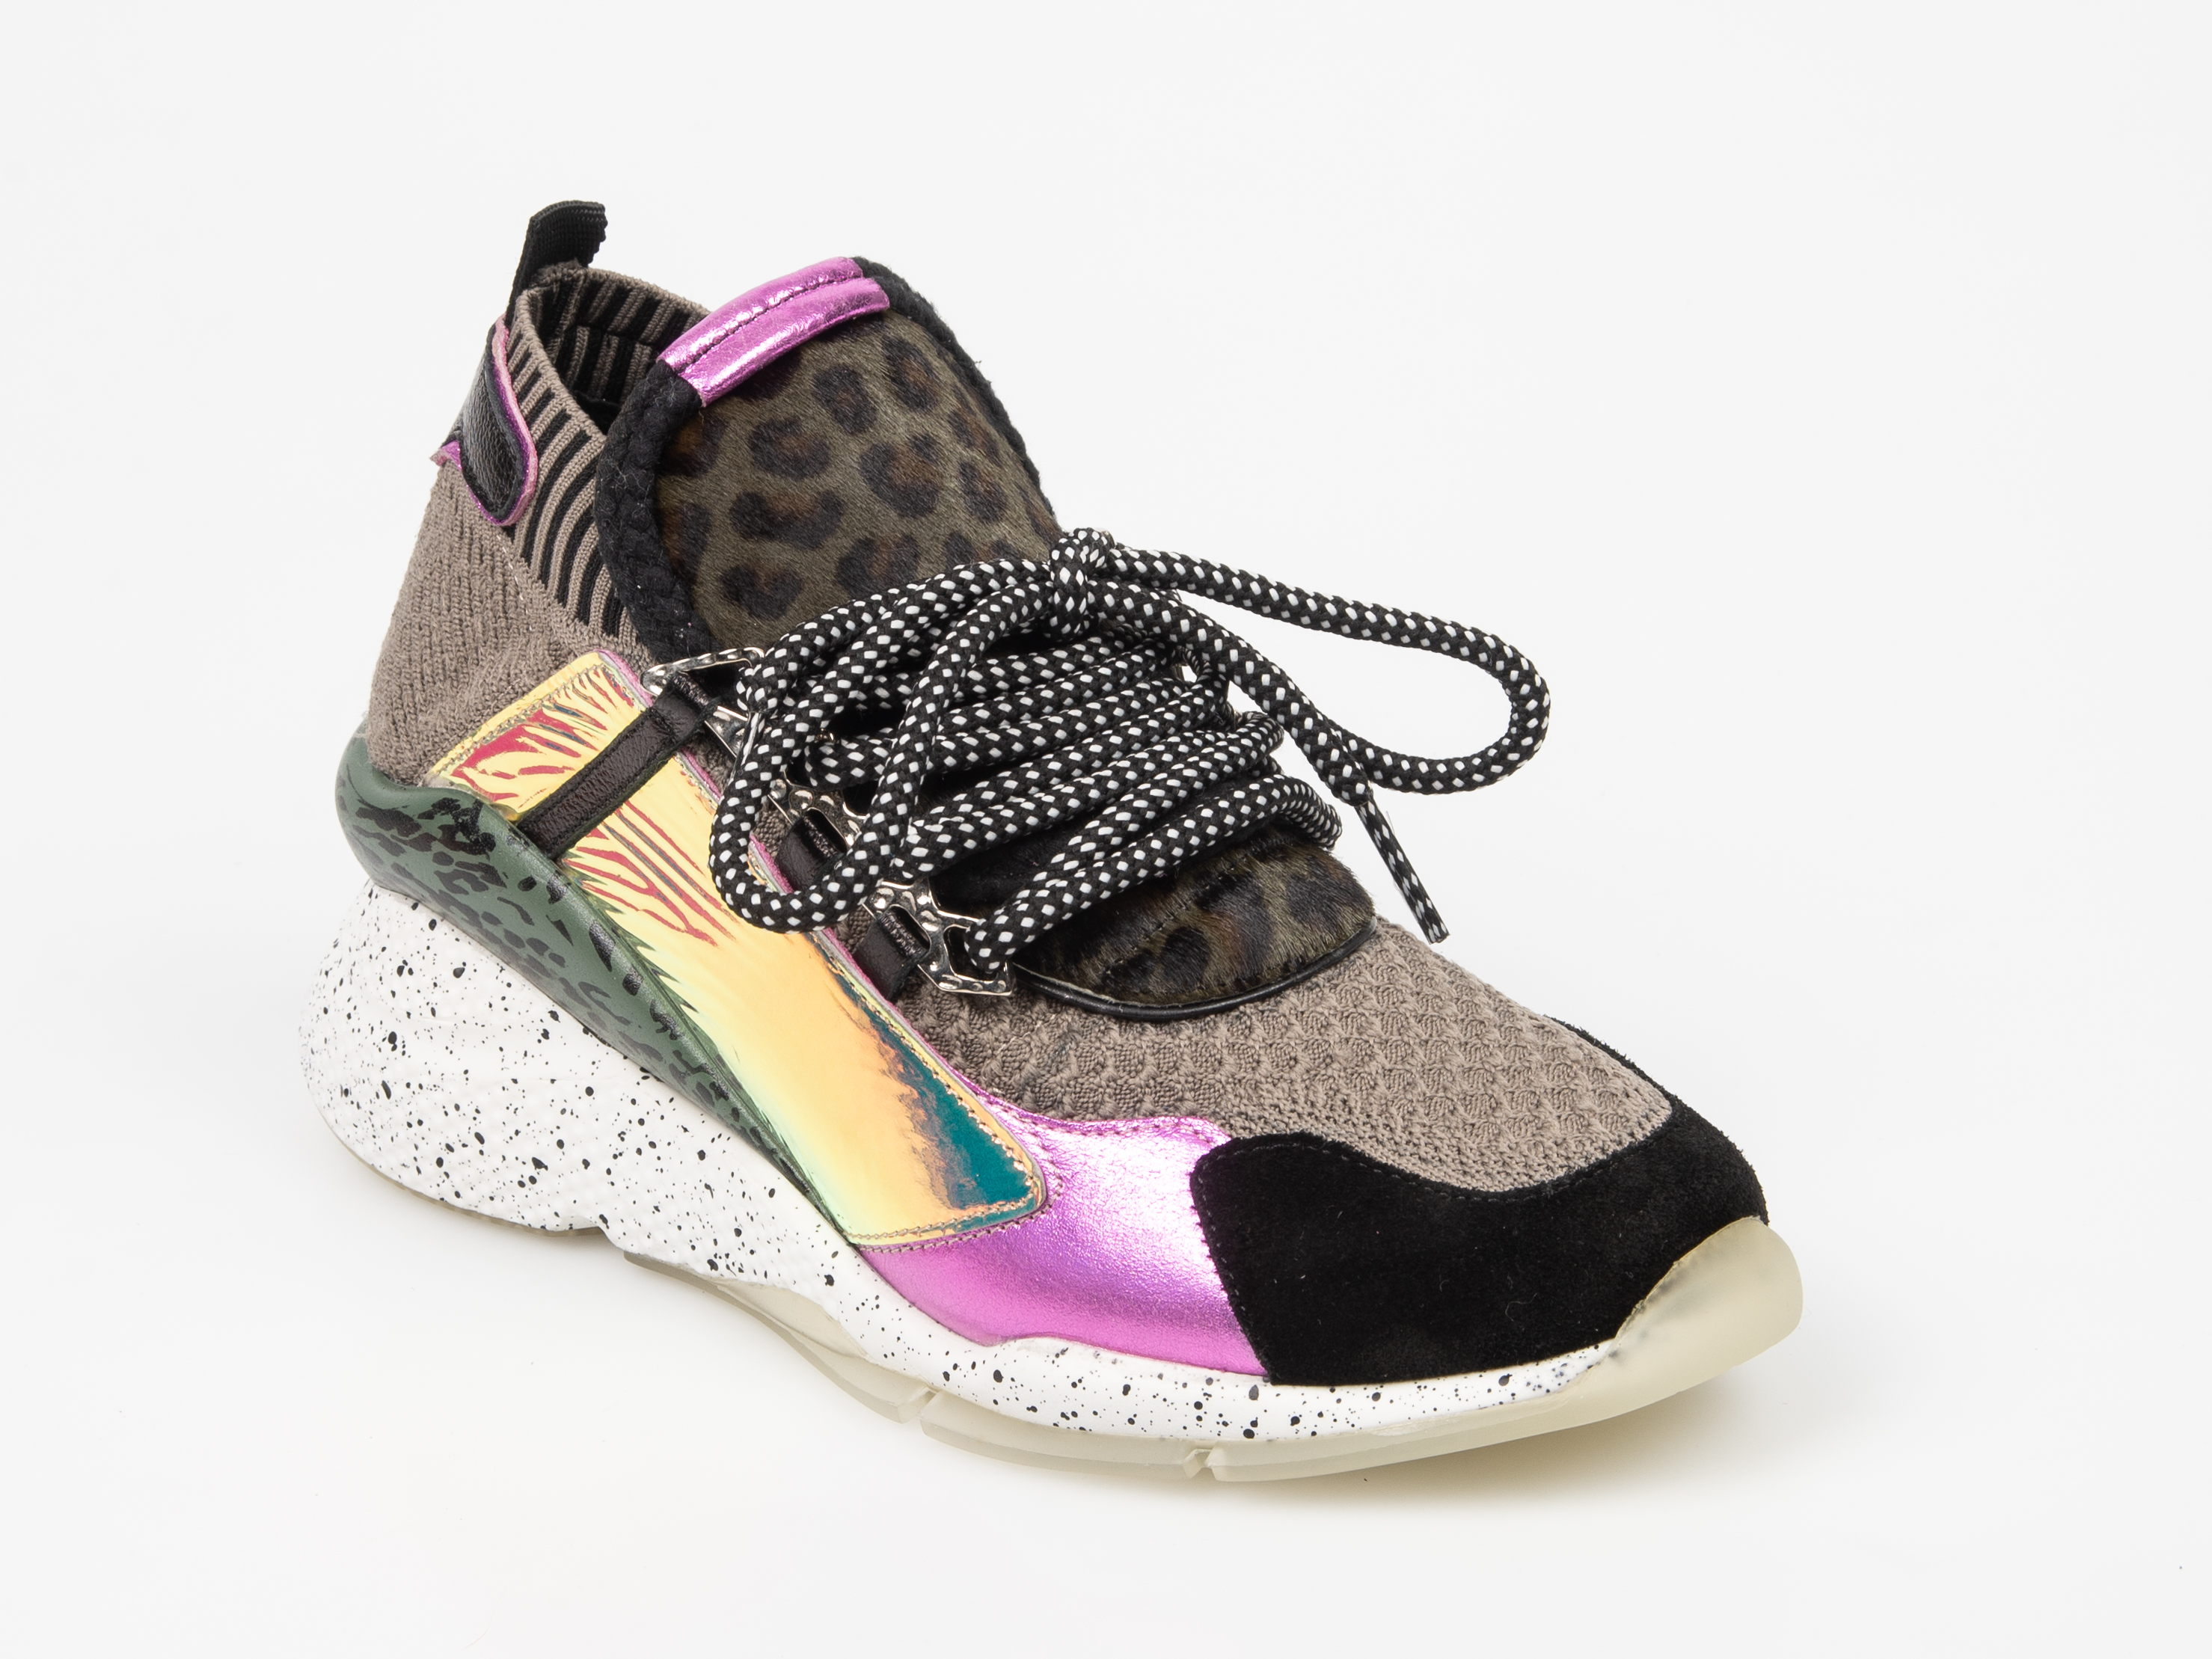 Pantofi sport EPICA multicolori, 3027, din material textil si piele naturala